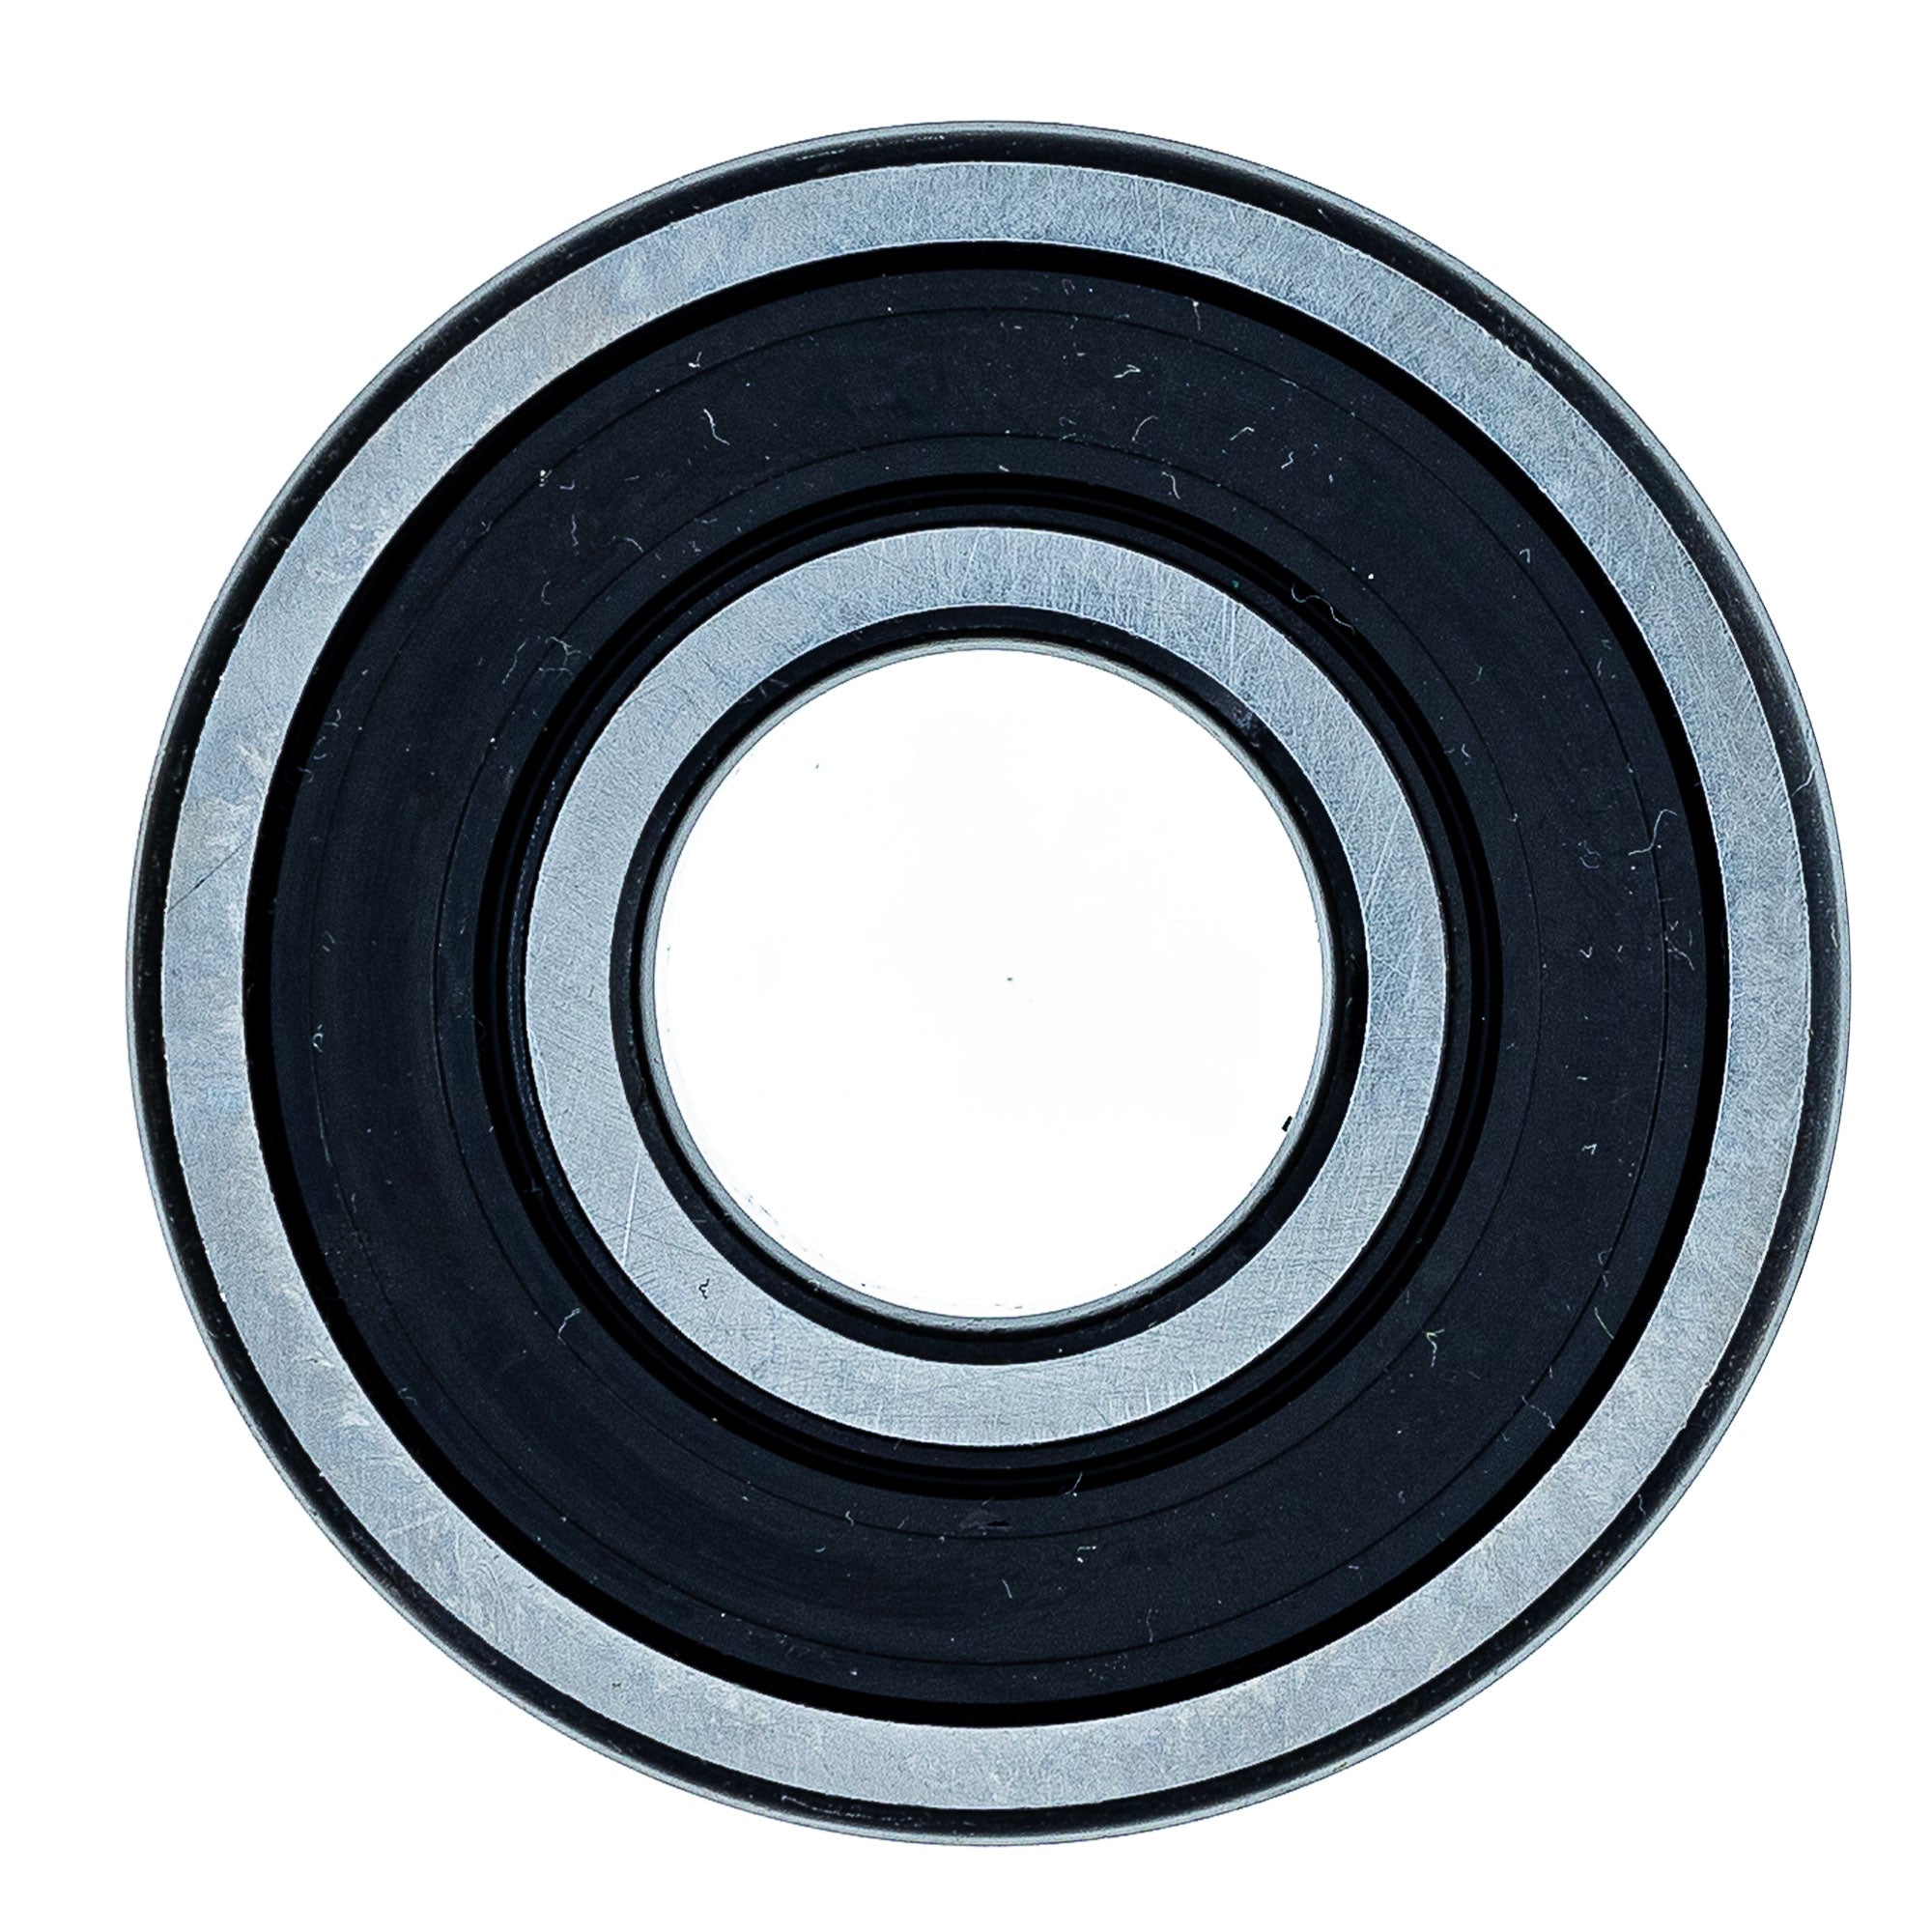 Wheel Bearing for Yamaha H6522 96150-63040-10 20x52x15mm Compact